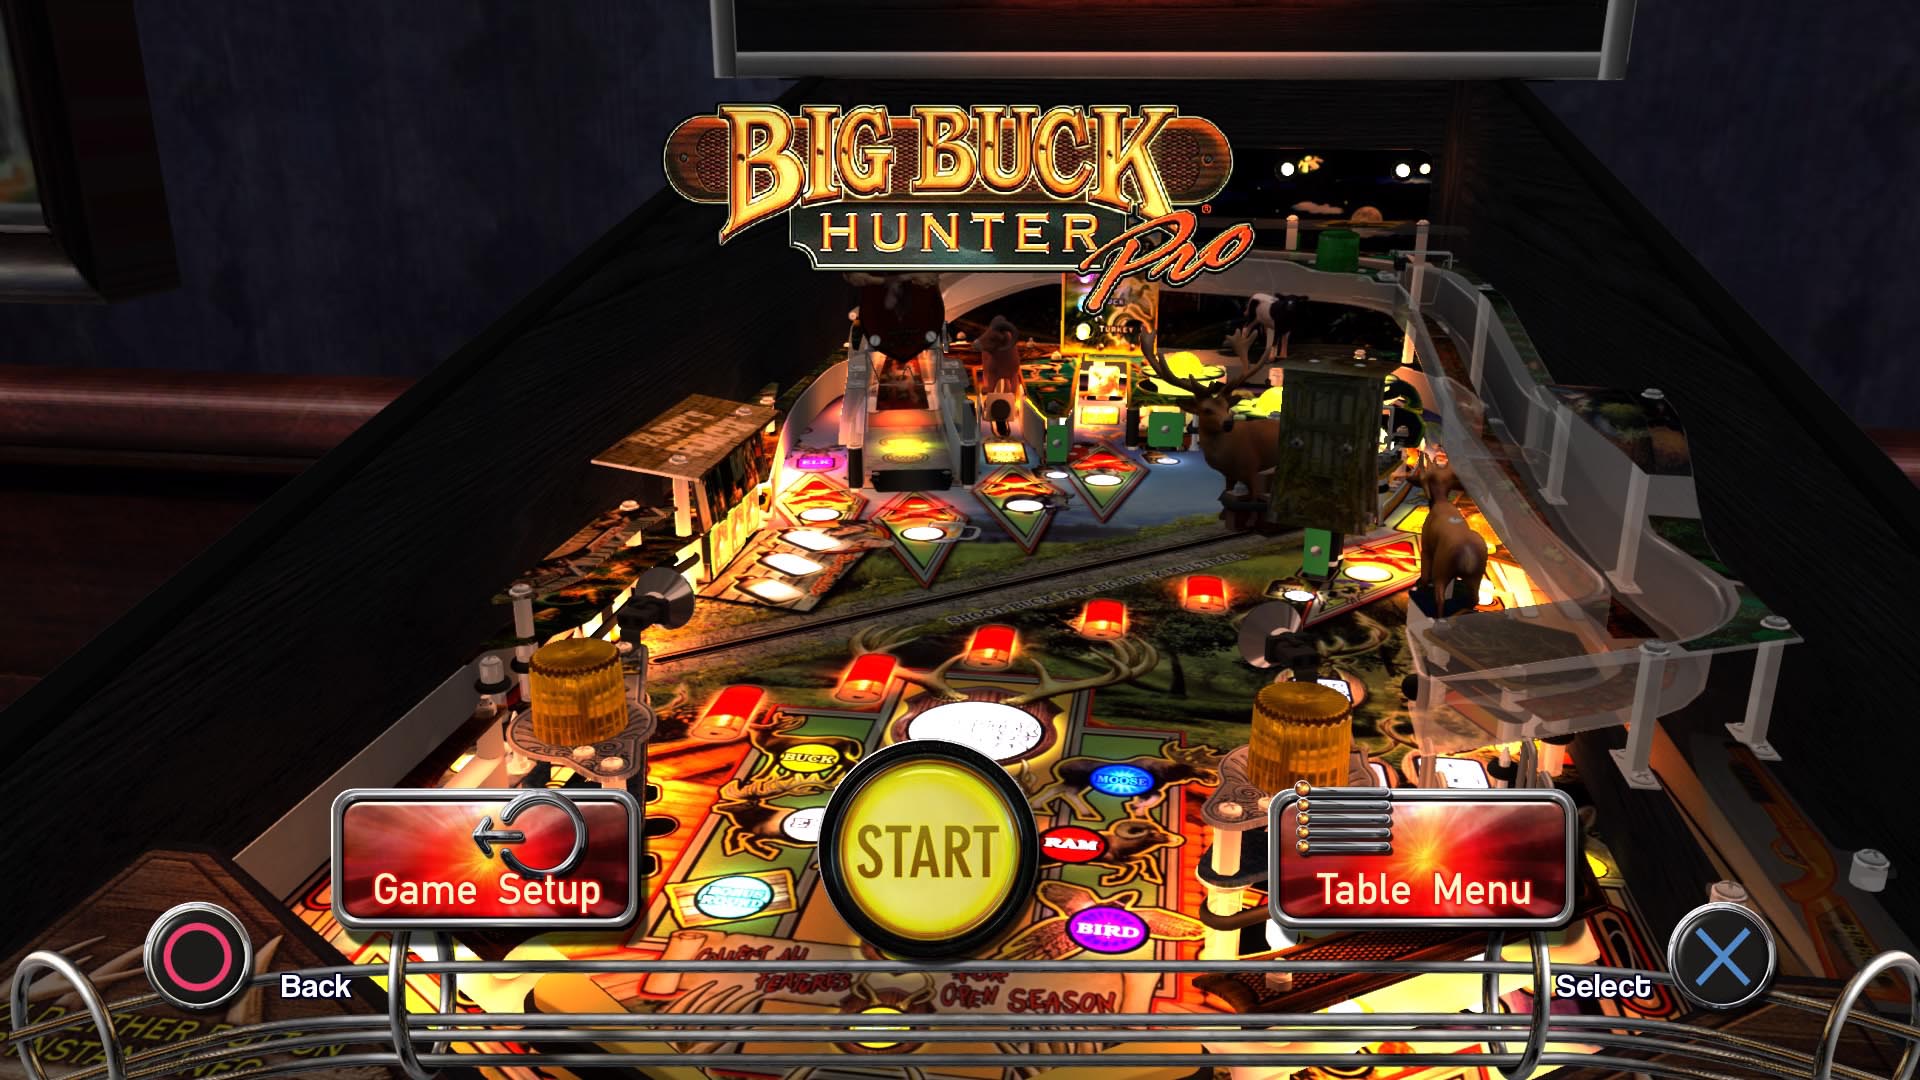 Big Buck Hunter Pro Game 